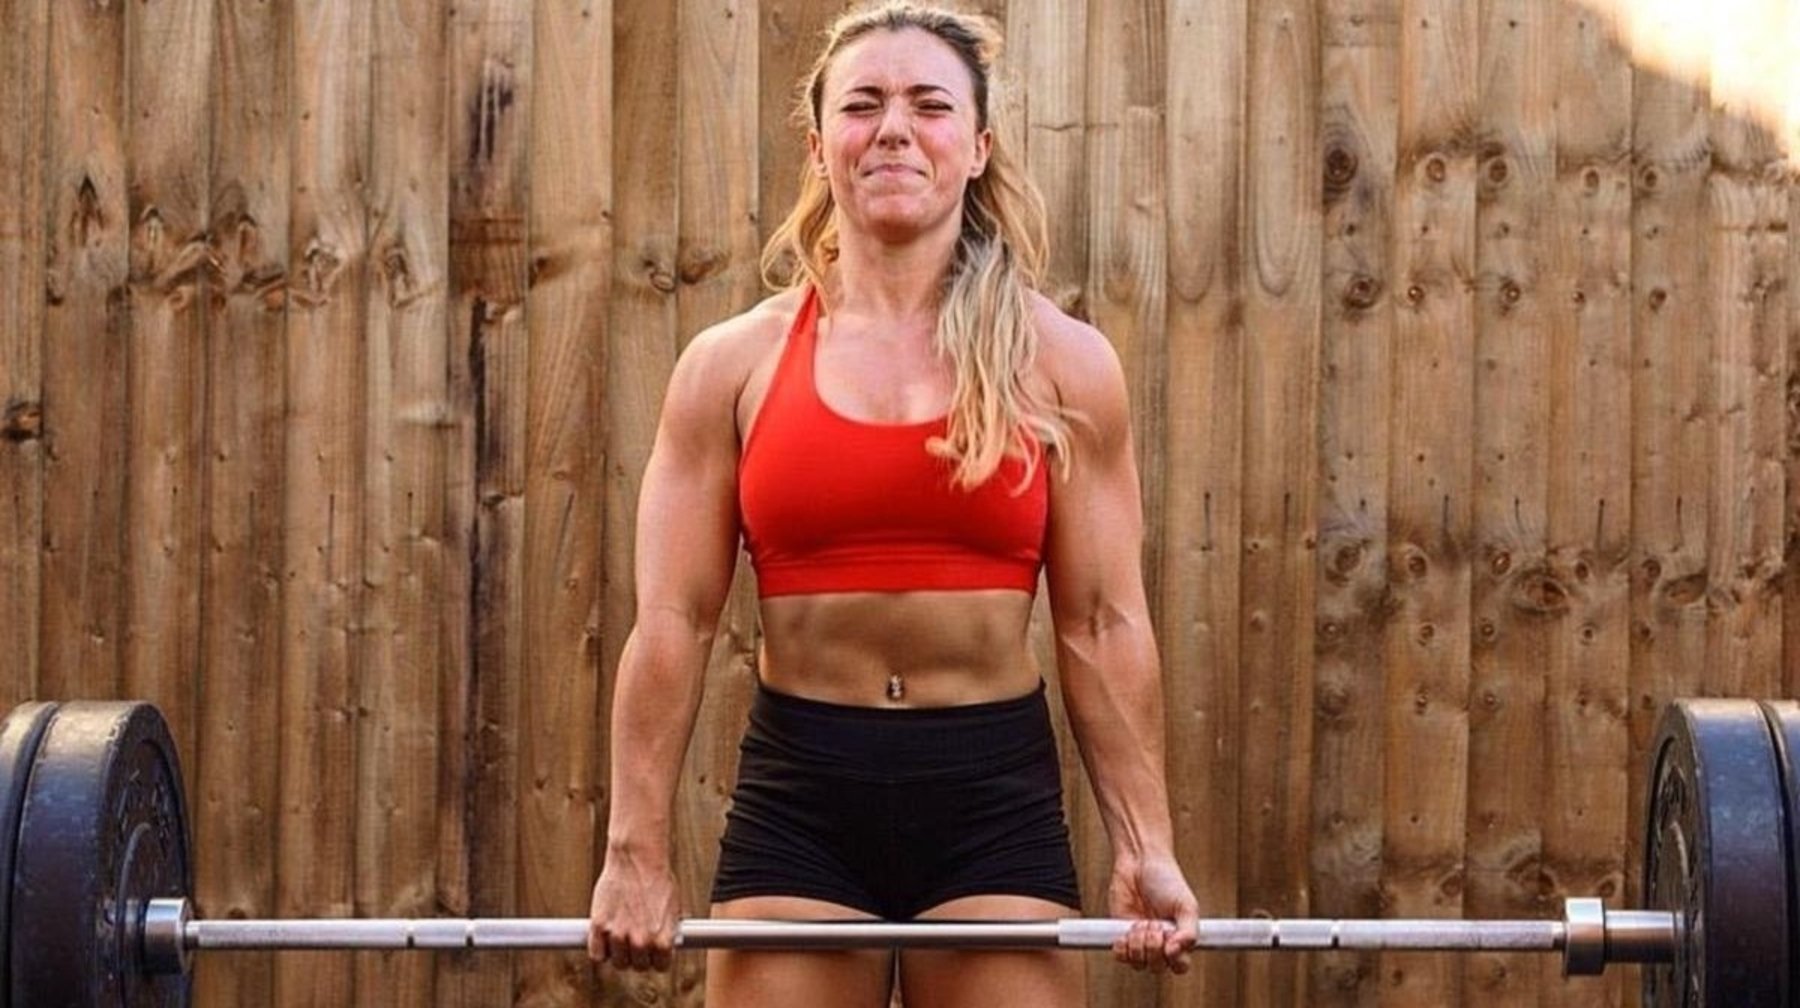 Van 400m hordenloper naar functional fitnessfanaat | Wie is Samantha Brown?